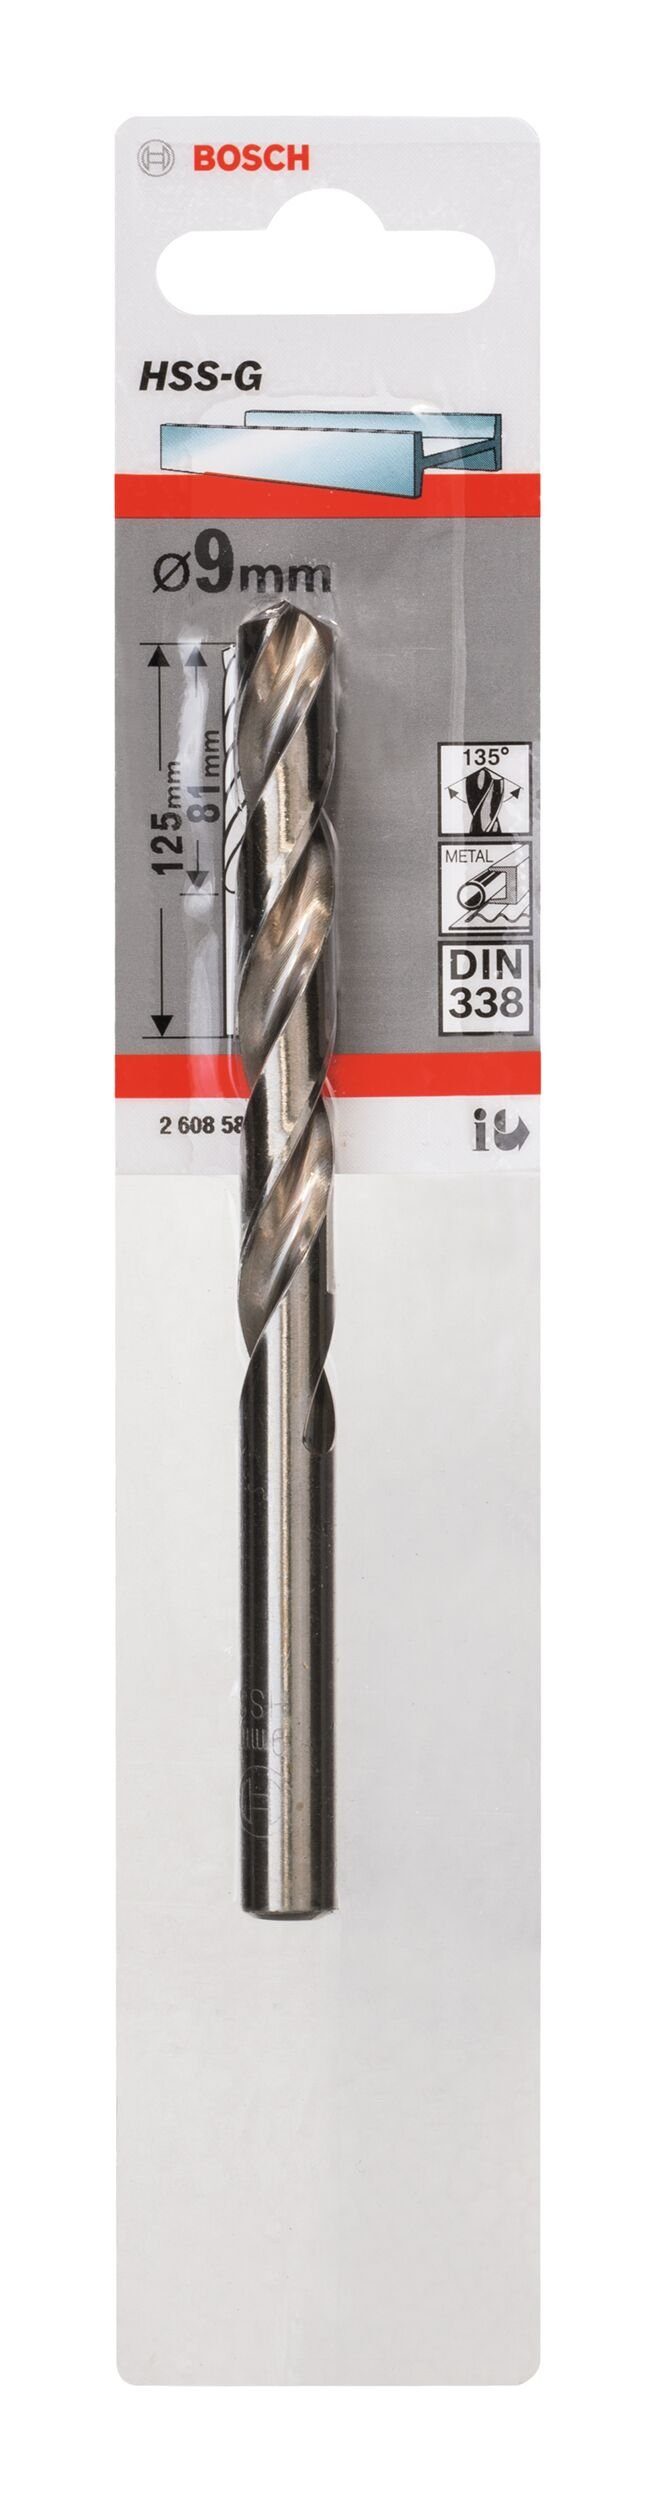 HSS-G (DIN x - BOSCH x 9 1er-Pack - Metallbohrer, 81 mm 125 338)